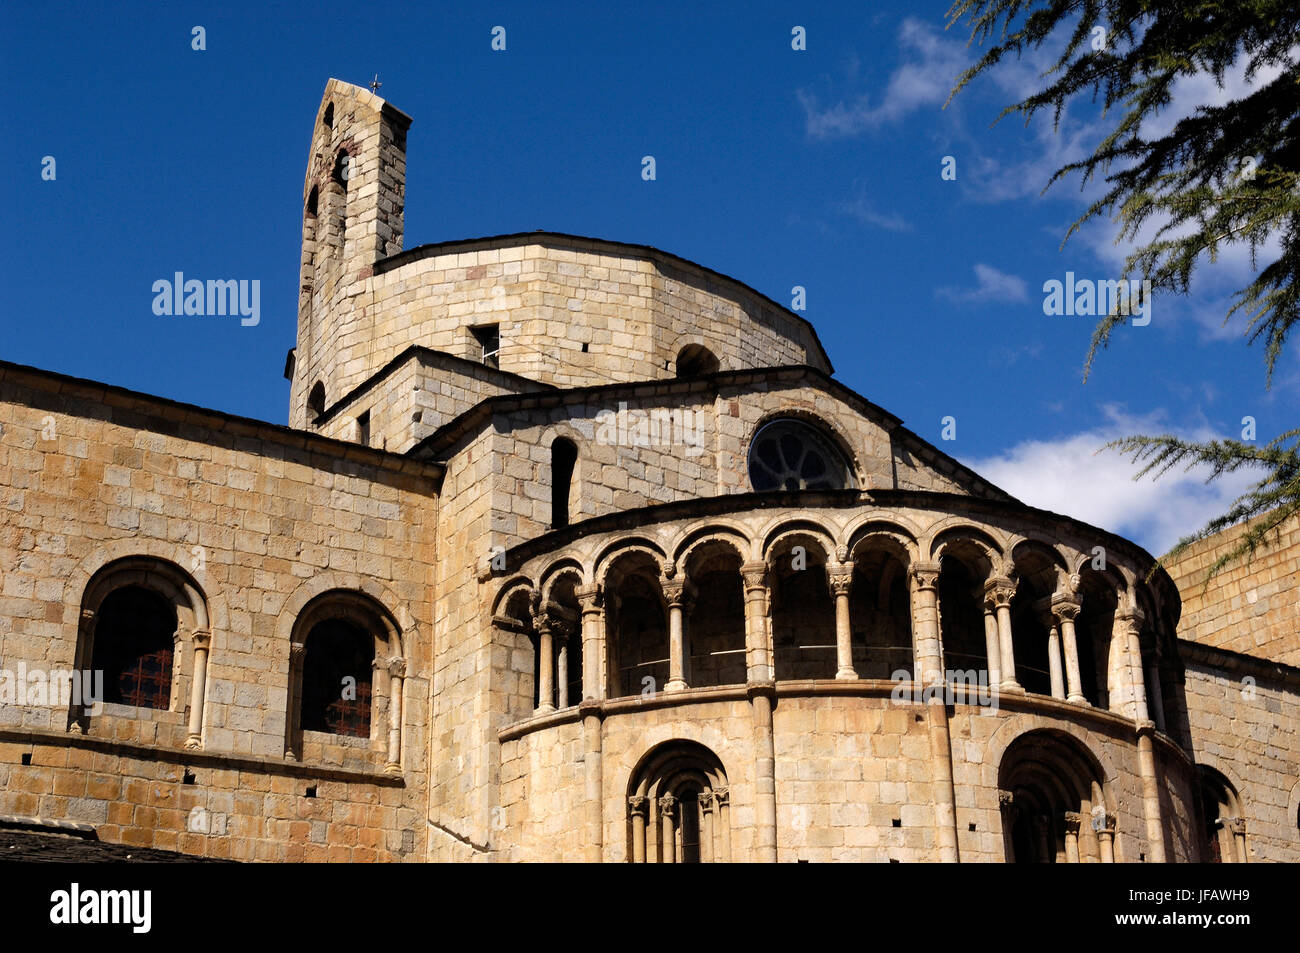 Cathedral of La Seu d urgell, Lleida province, Catalonia, Spain Stock Photo